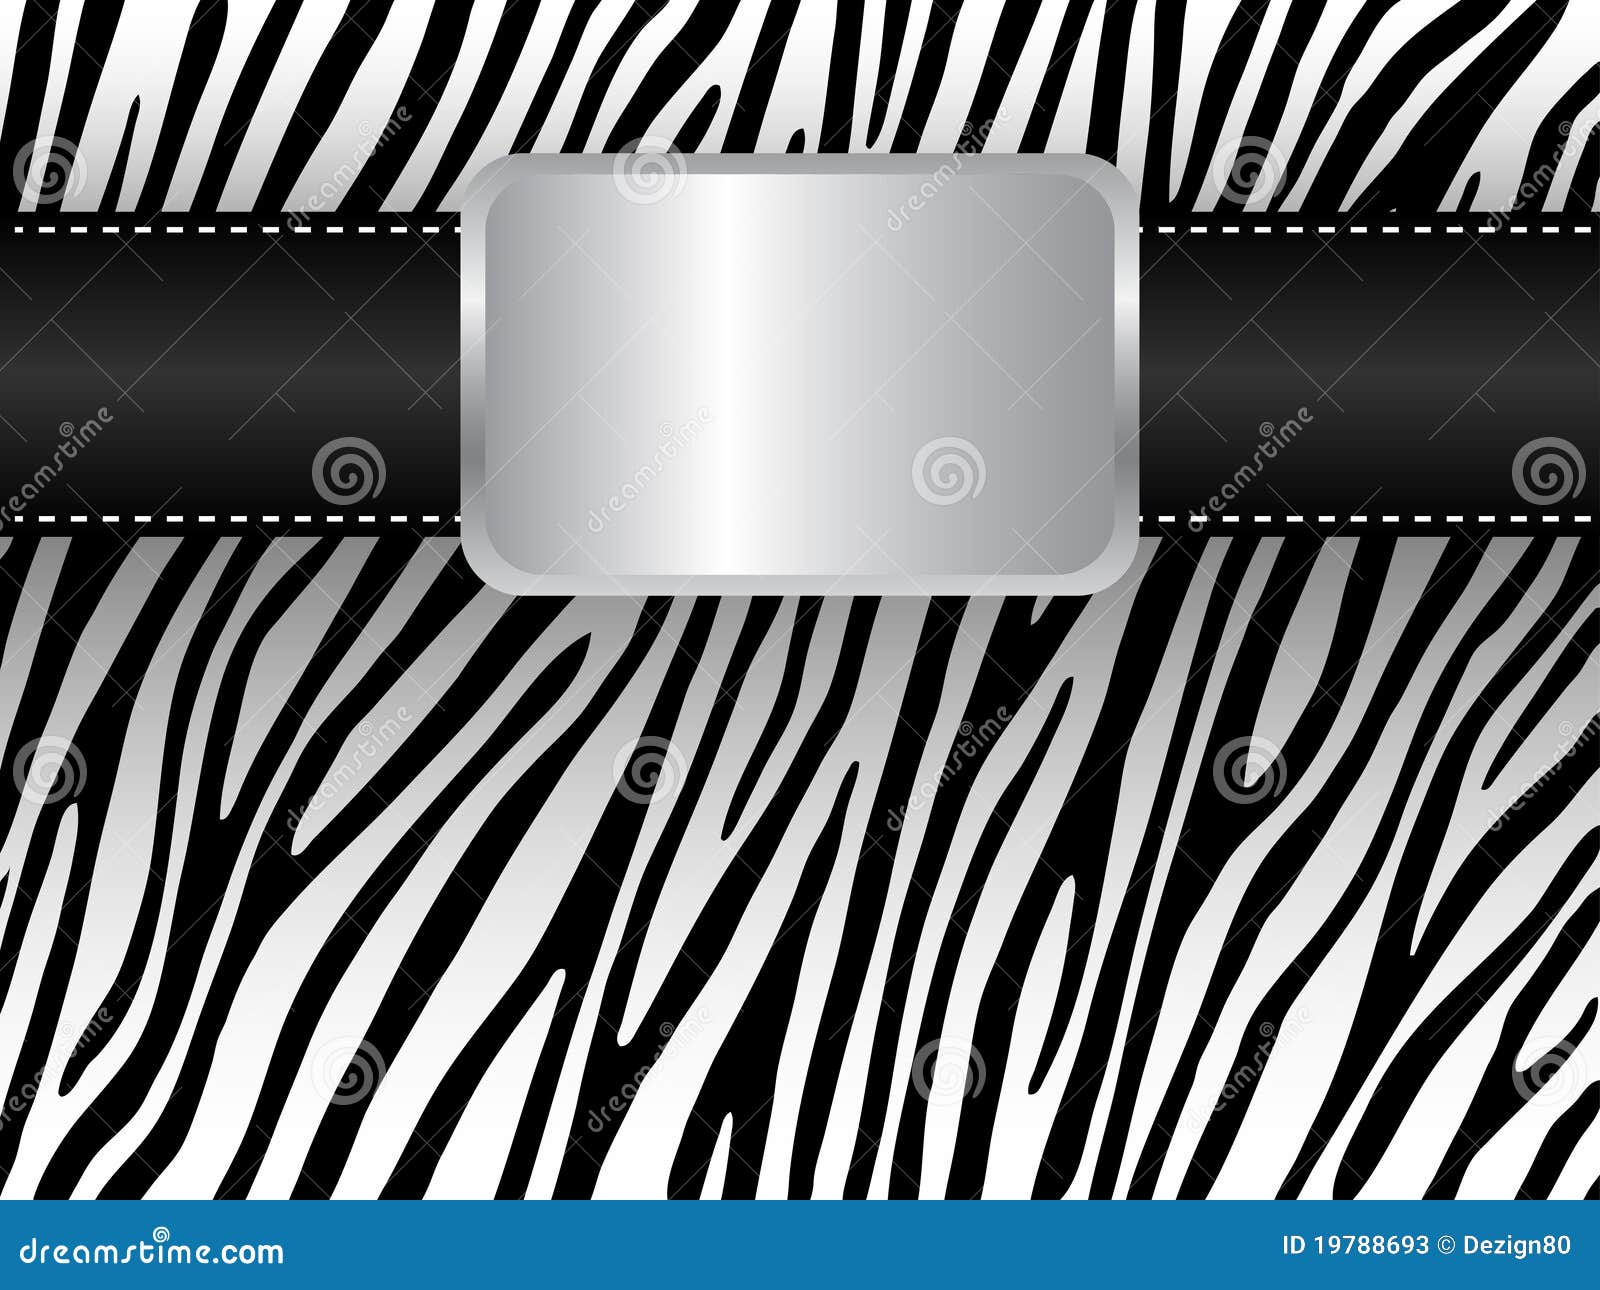 strap on the background of a zebra